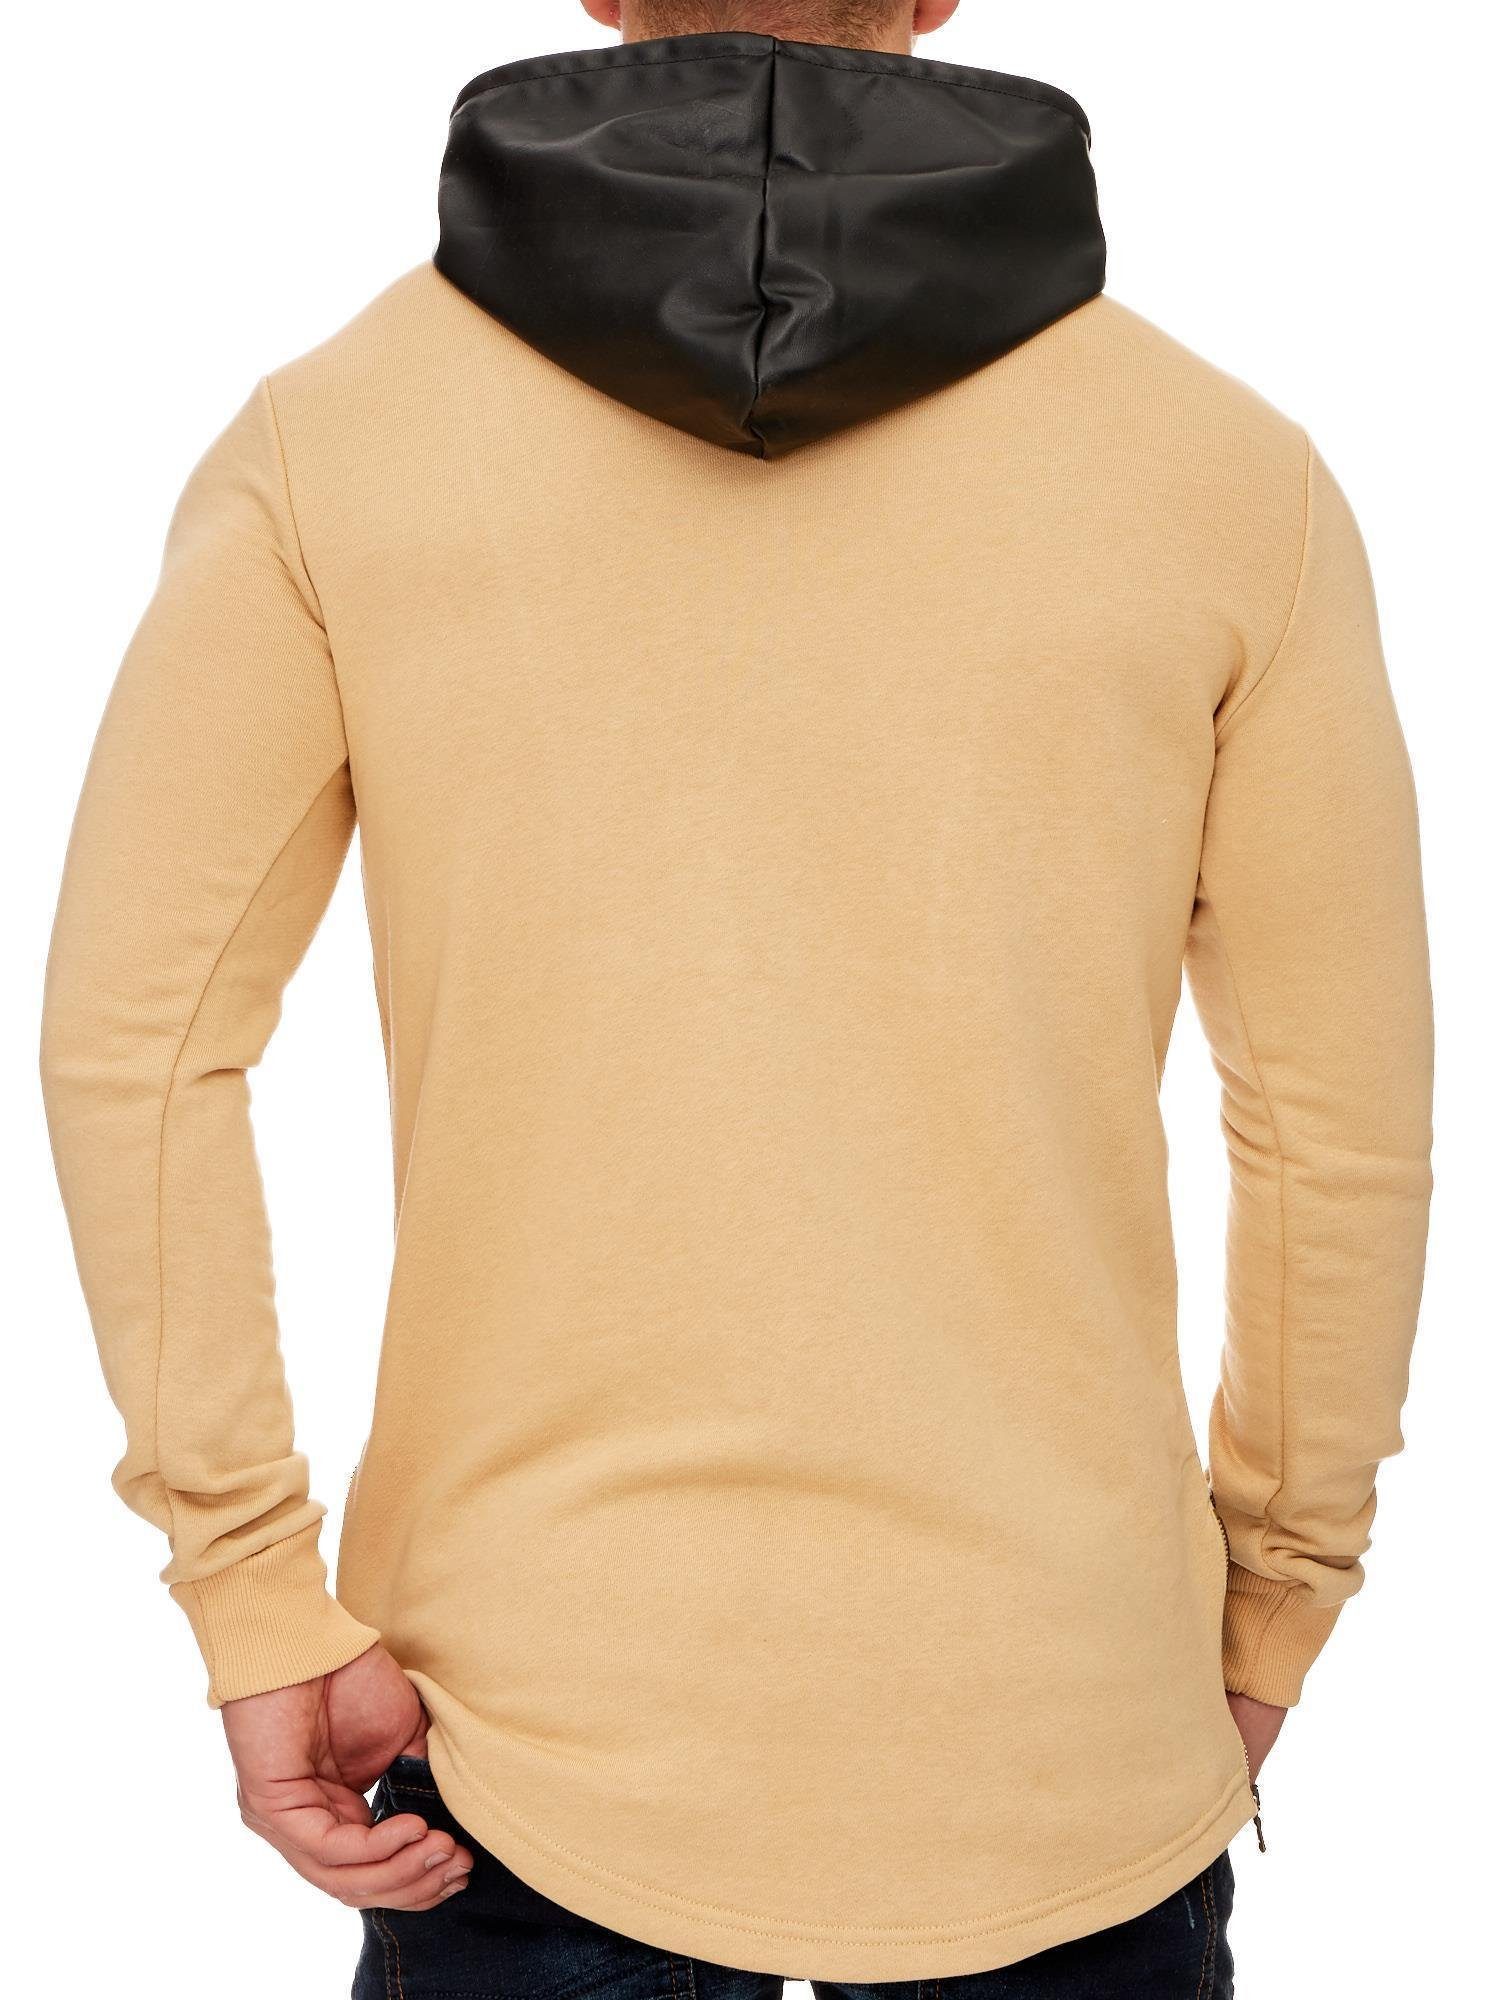 Tazzio Sweatshirt Oversize modisches Kapuzensweatshirt beige-1216